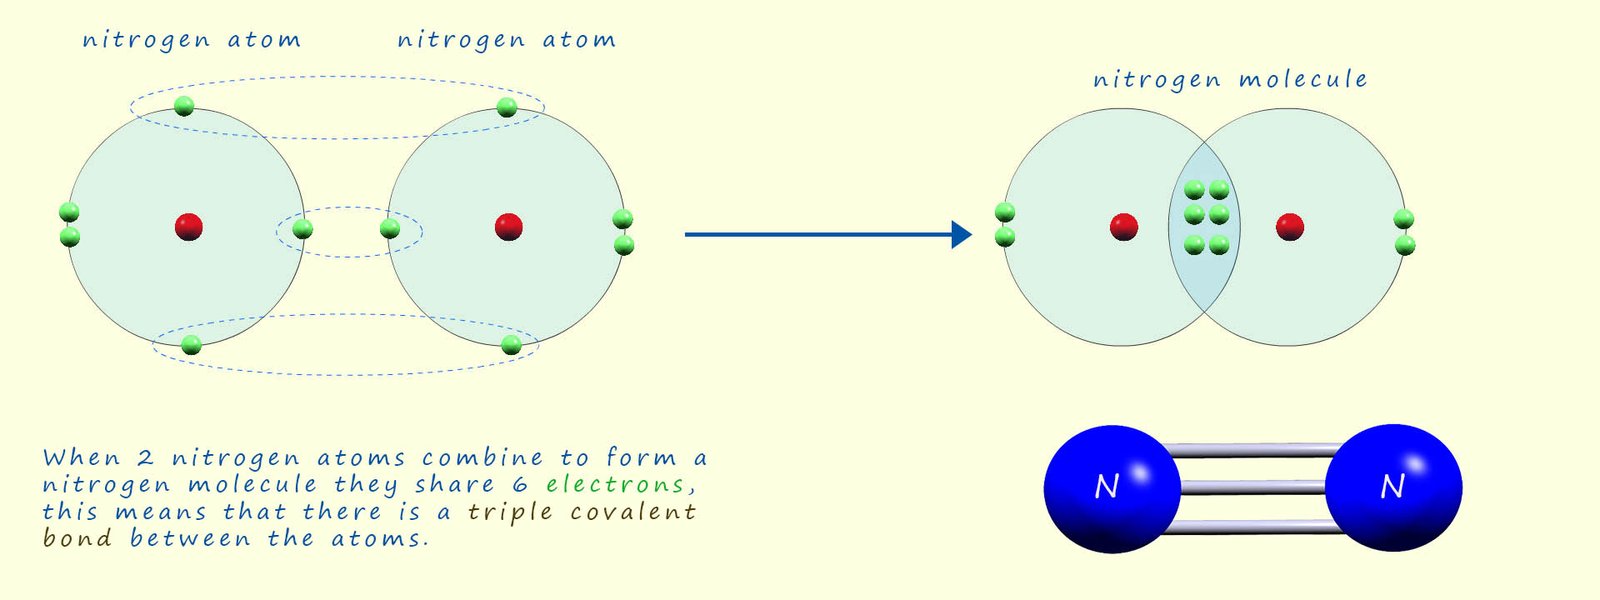 Image showing how two nitrogen atoms combine to form a nitrogen molecule containing a triple covalent bond.